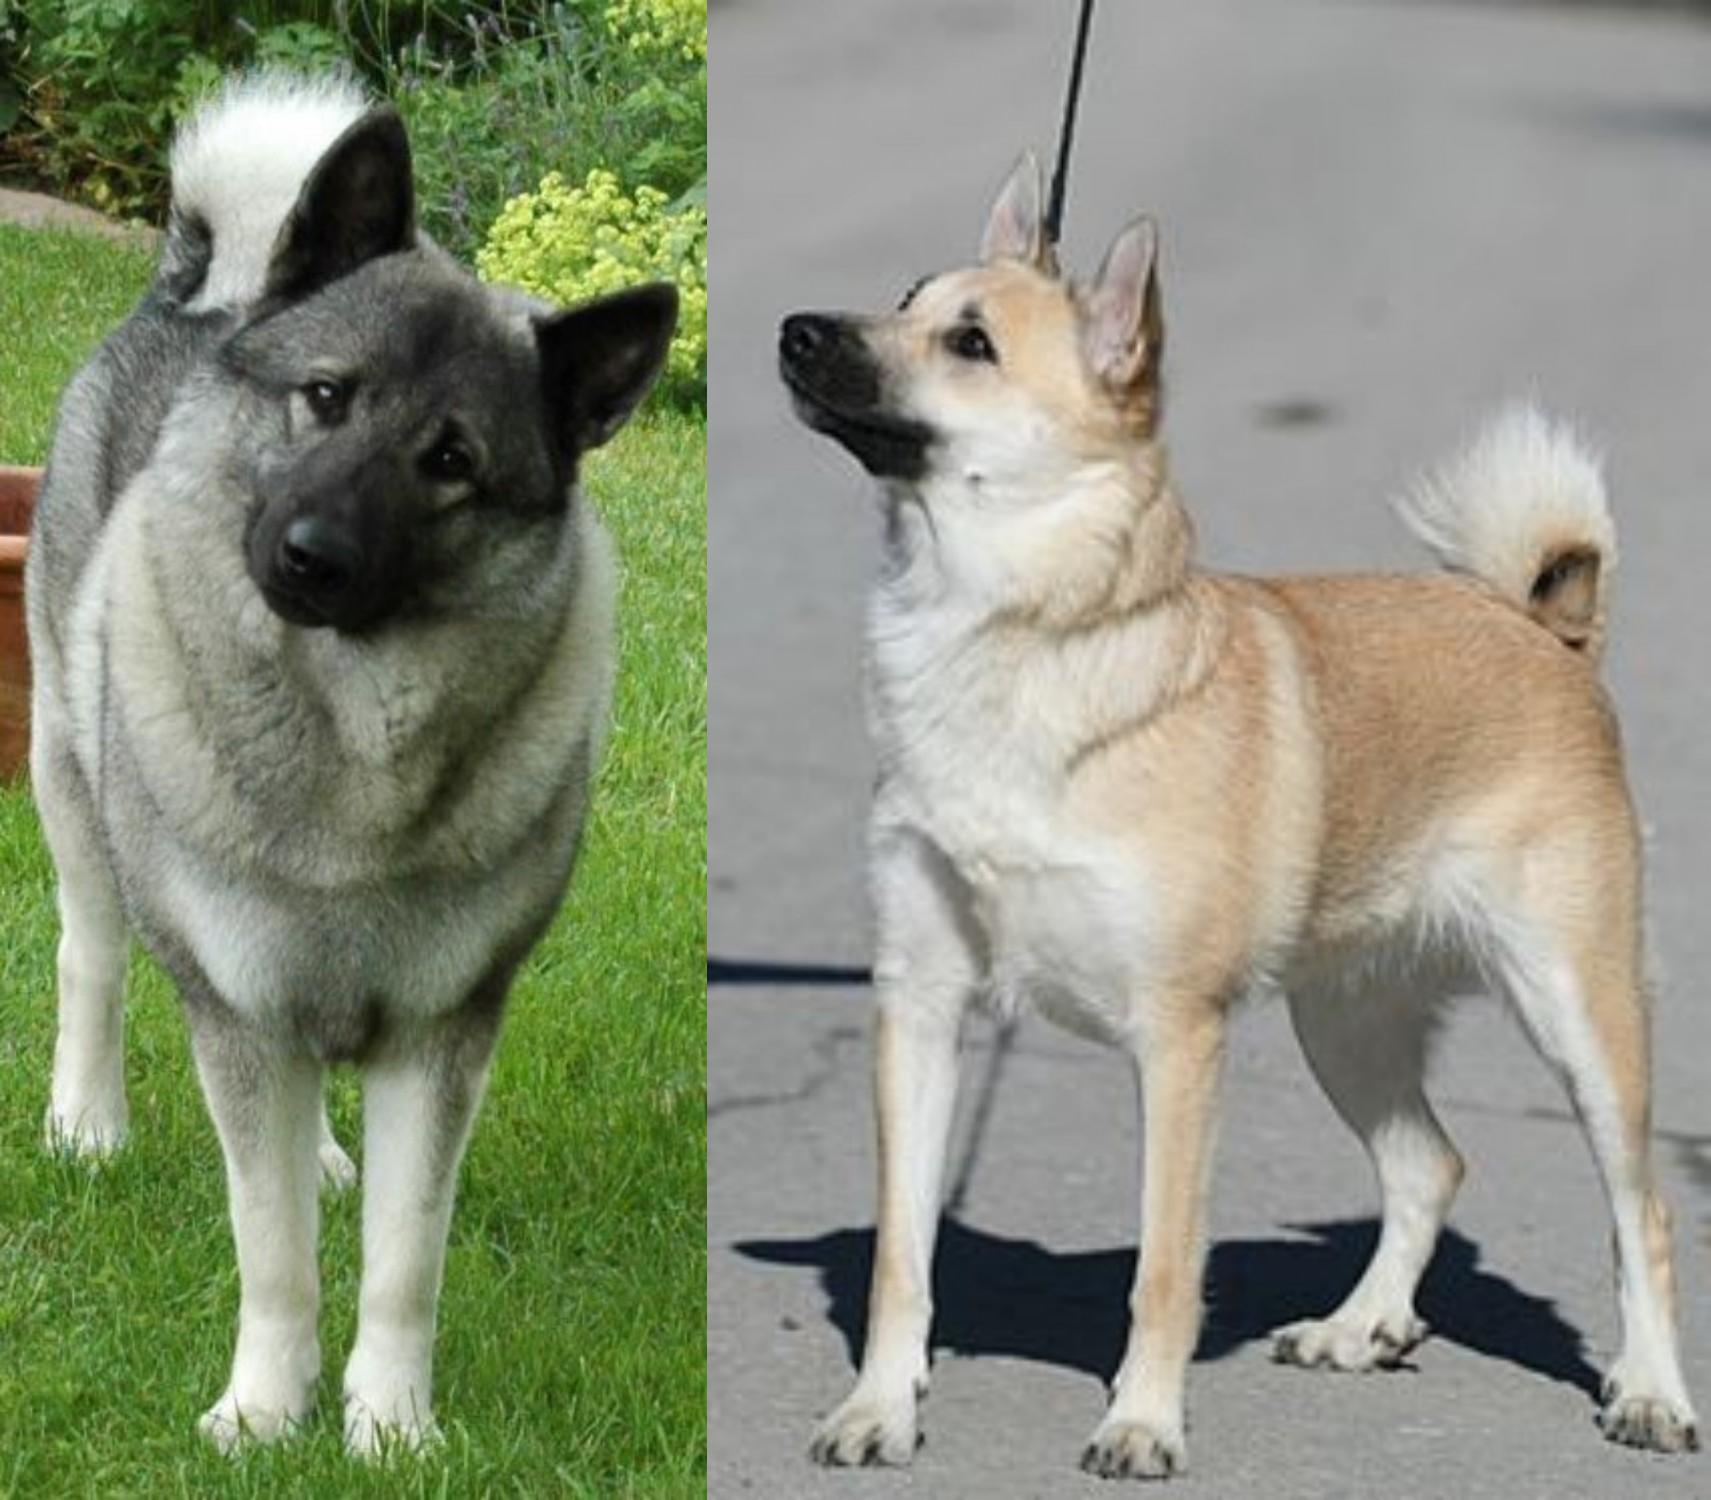 norwegian elkhound similar breeds